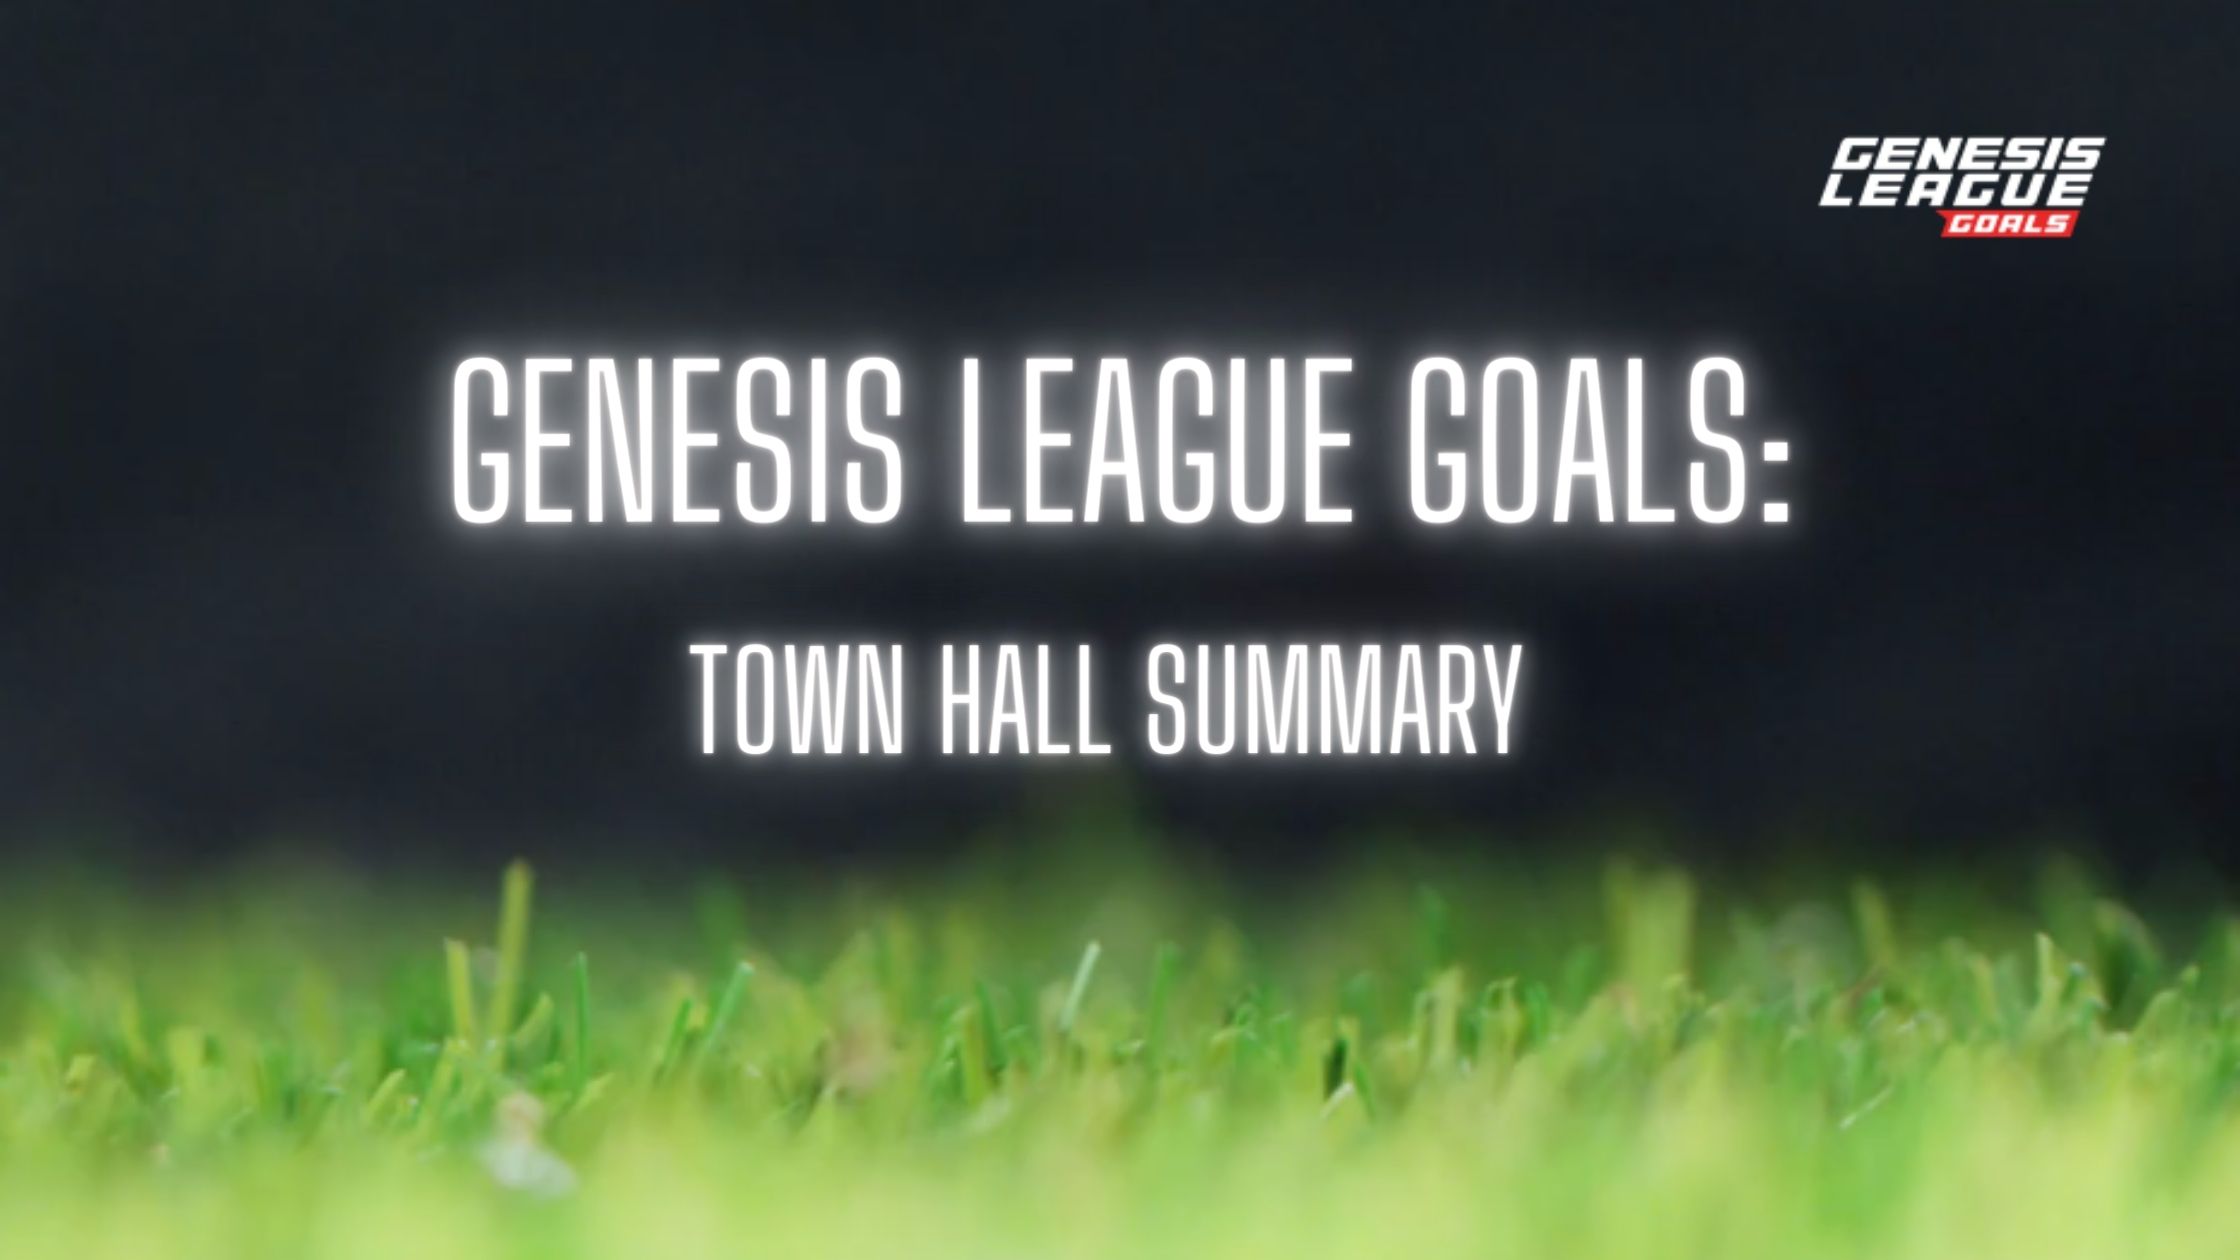 @brando28/genesis-league-goals-town-hall-summary